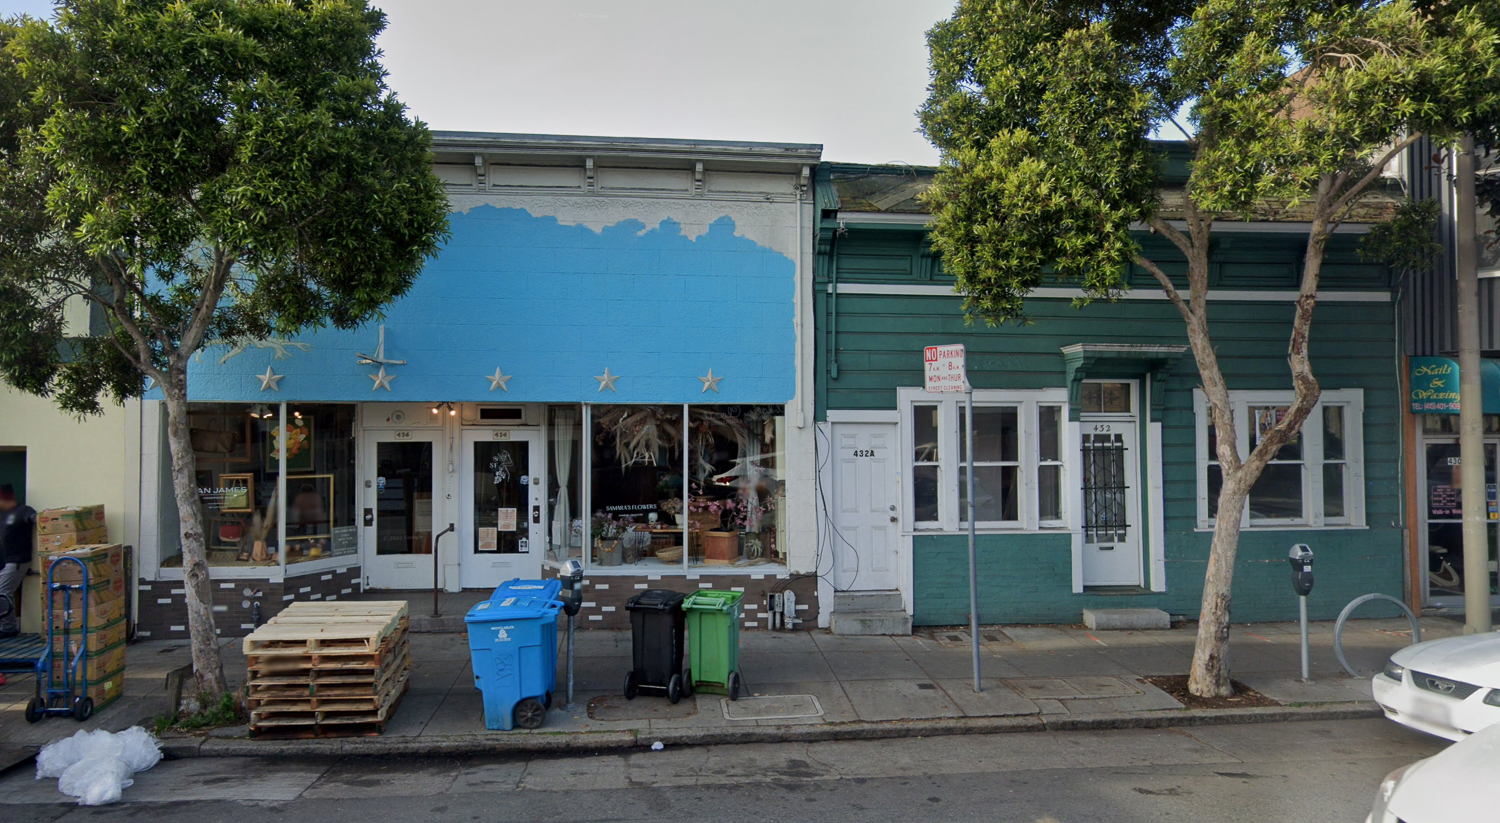 432 and 434 Cortland Avenue, image via Google Street View